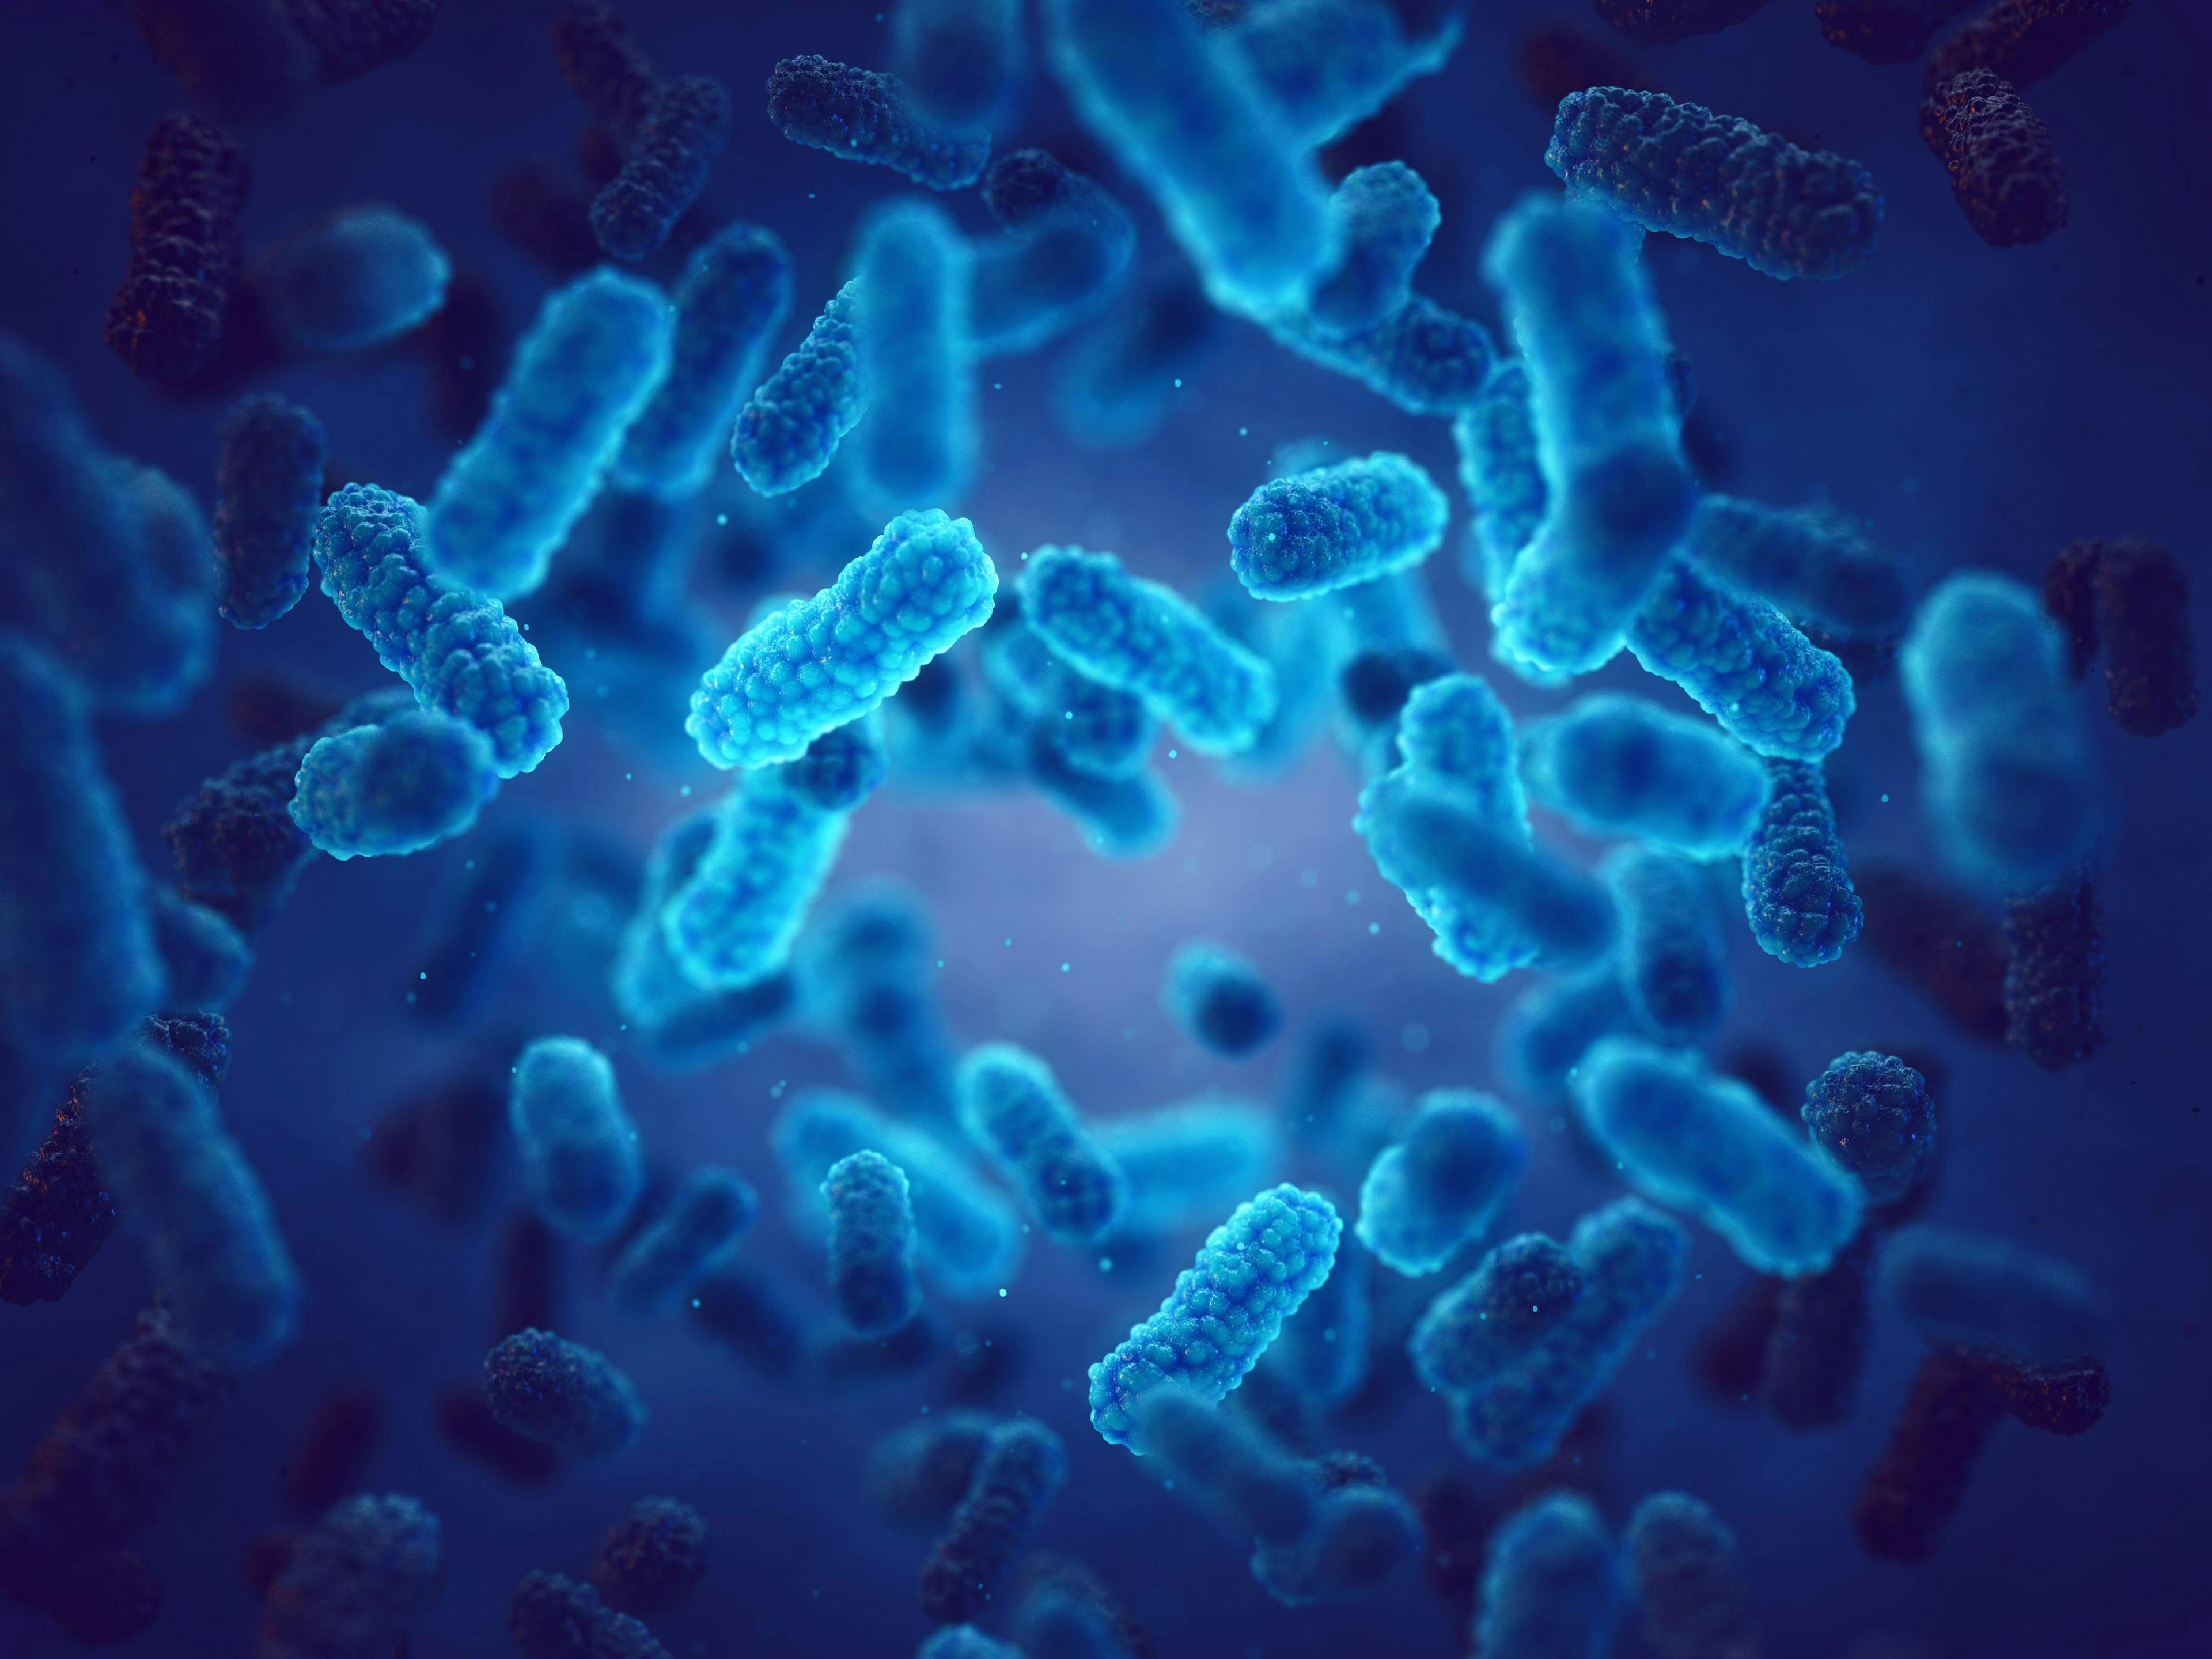 Pathogenic bacteria, Epidemic bacterial infection | Image Credit: © nobeastsofierce - stock.adobe.com